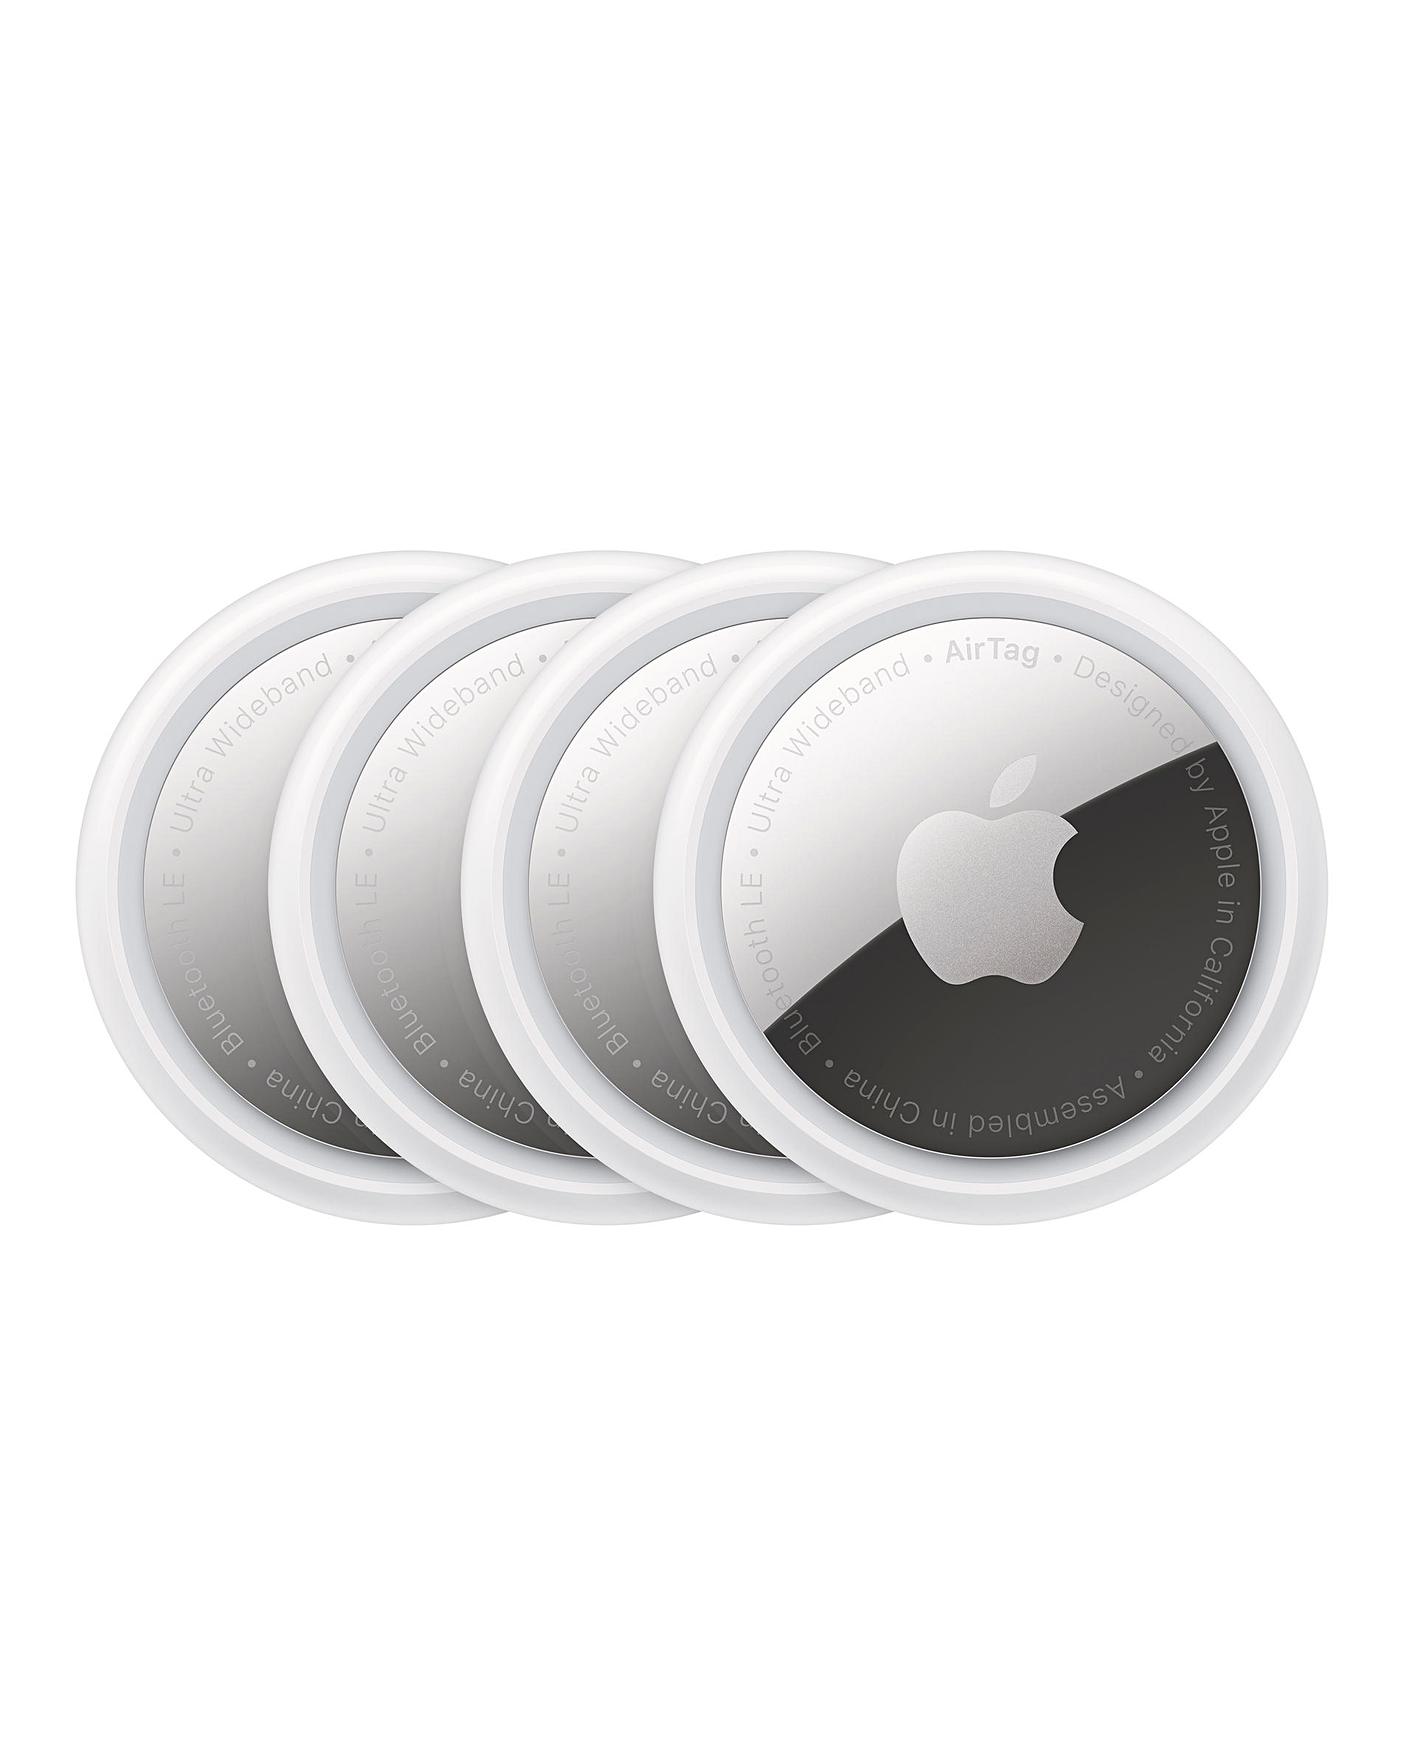 Apple AirTag 4 Pack - Silver